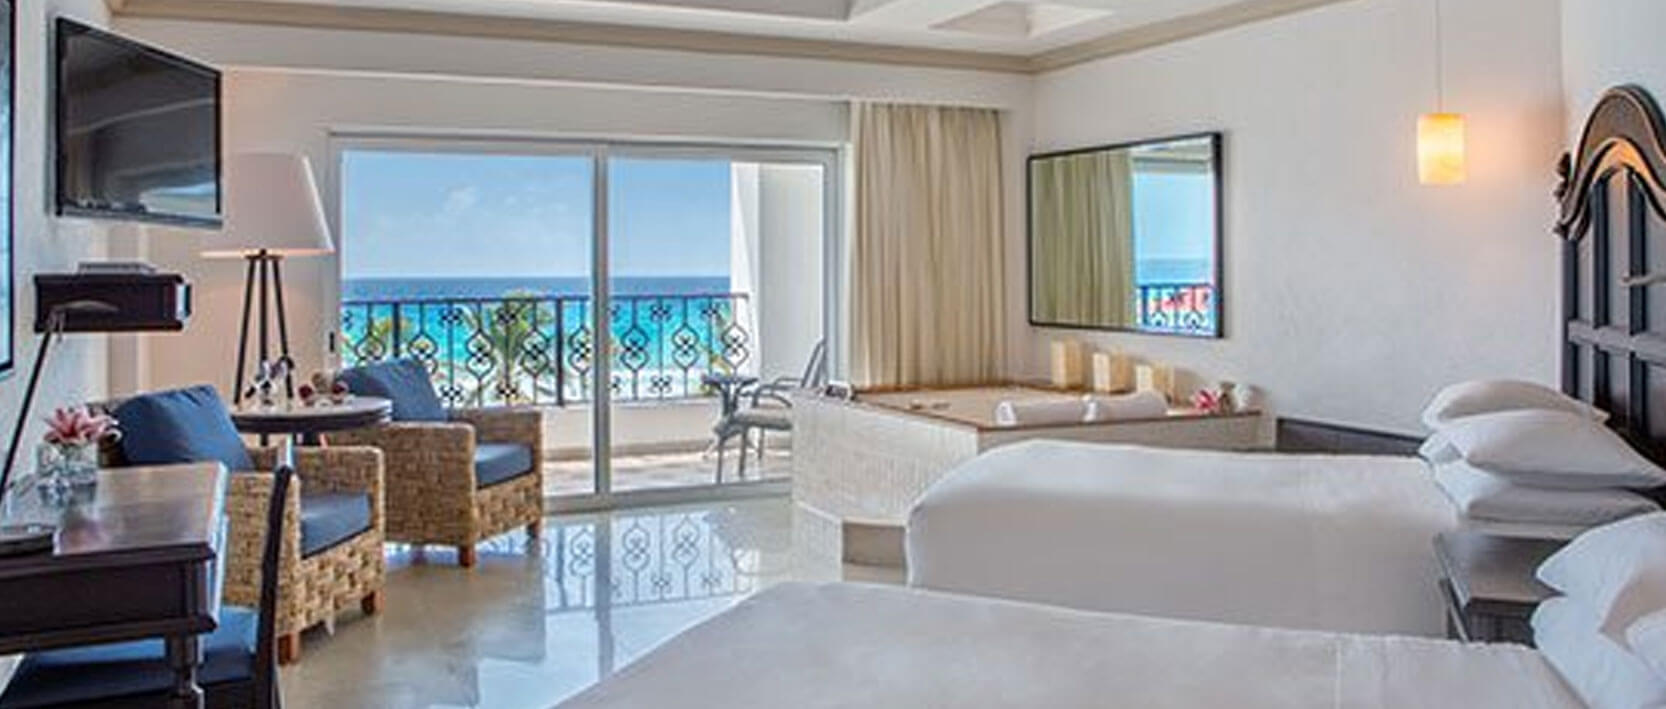 Hyatt Zilara Cancun Accommodations - Oceanfront Junior Suite King or Double